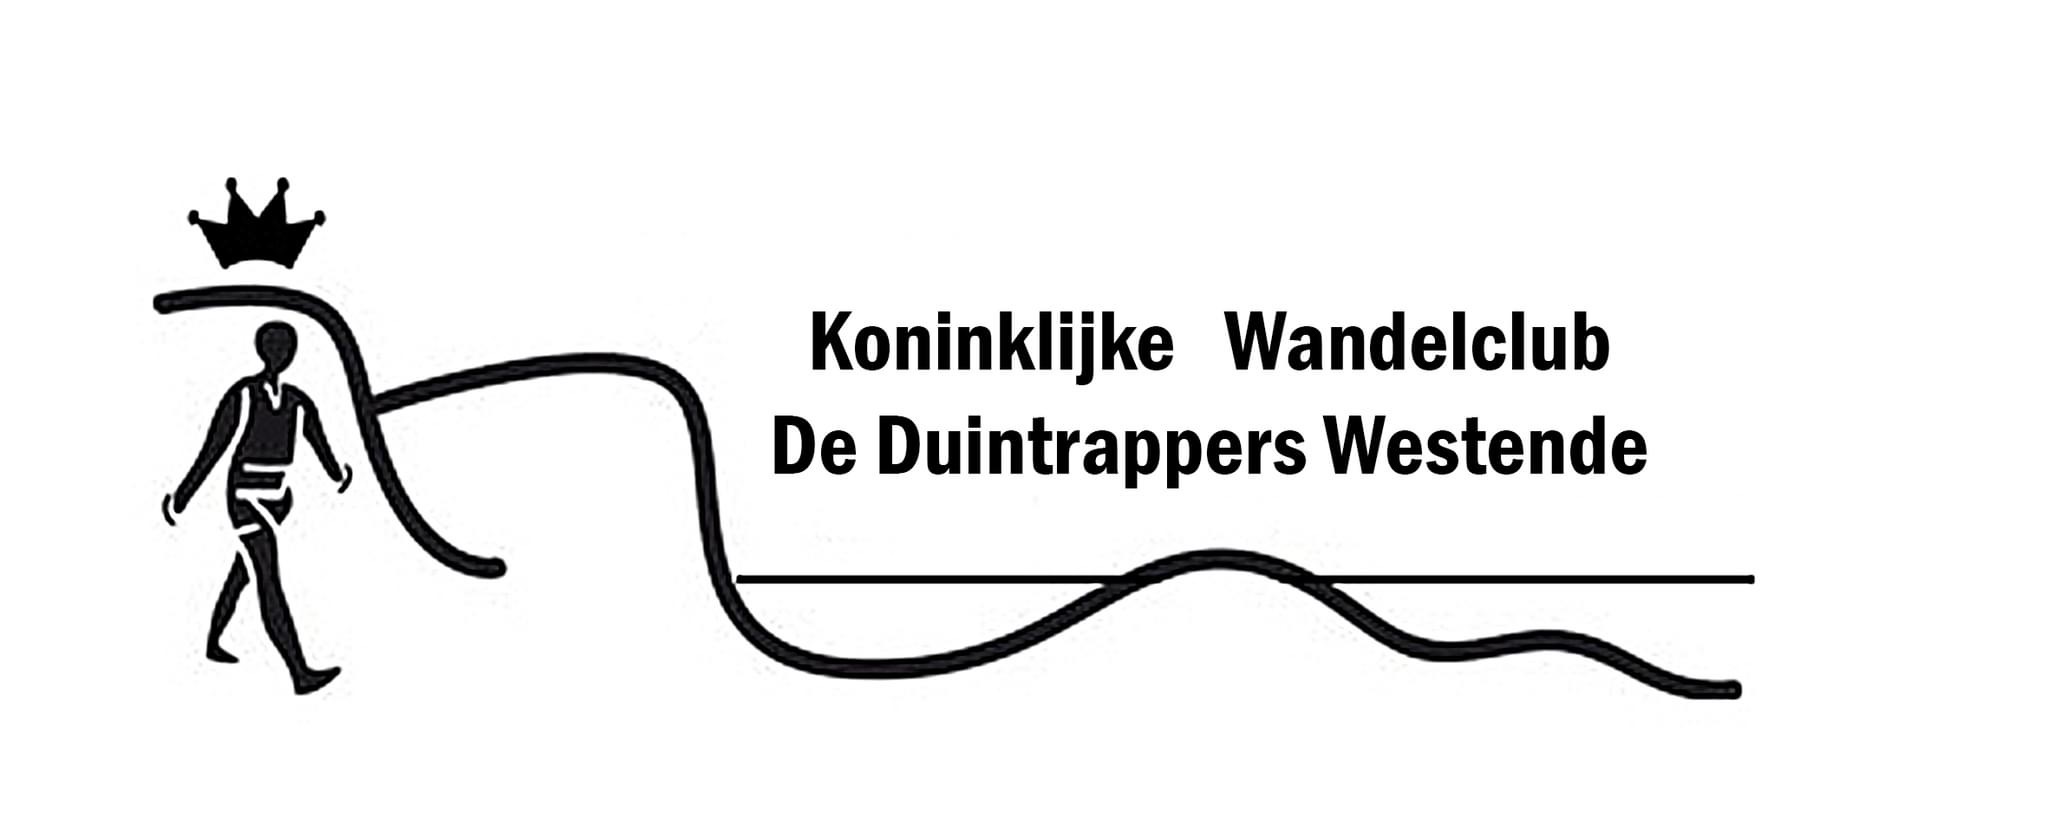 Koninklijke Wandelclub De Duintrappers Westende VZW